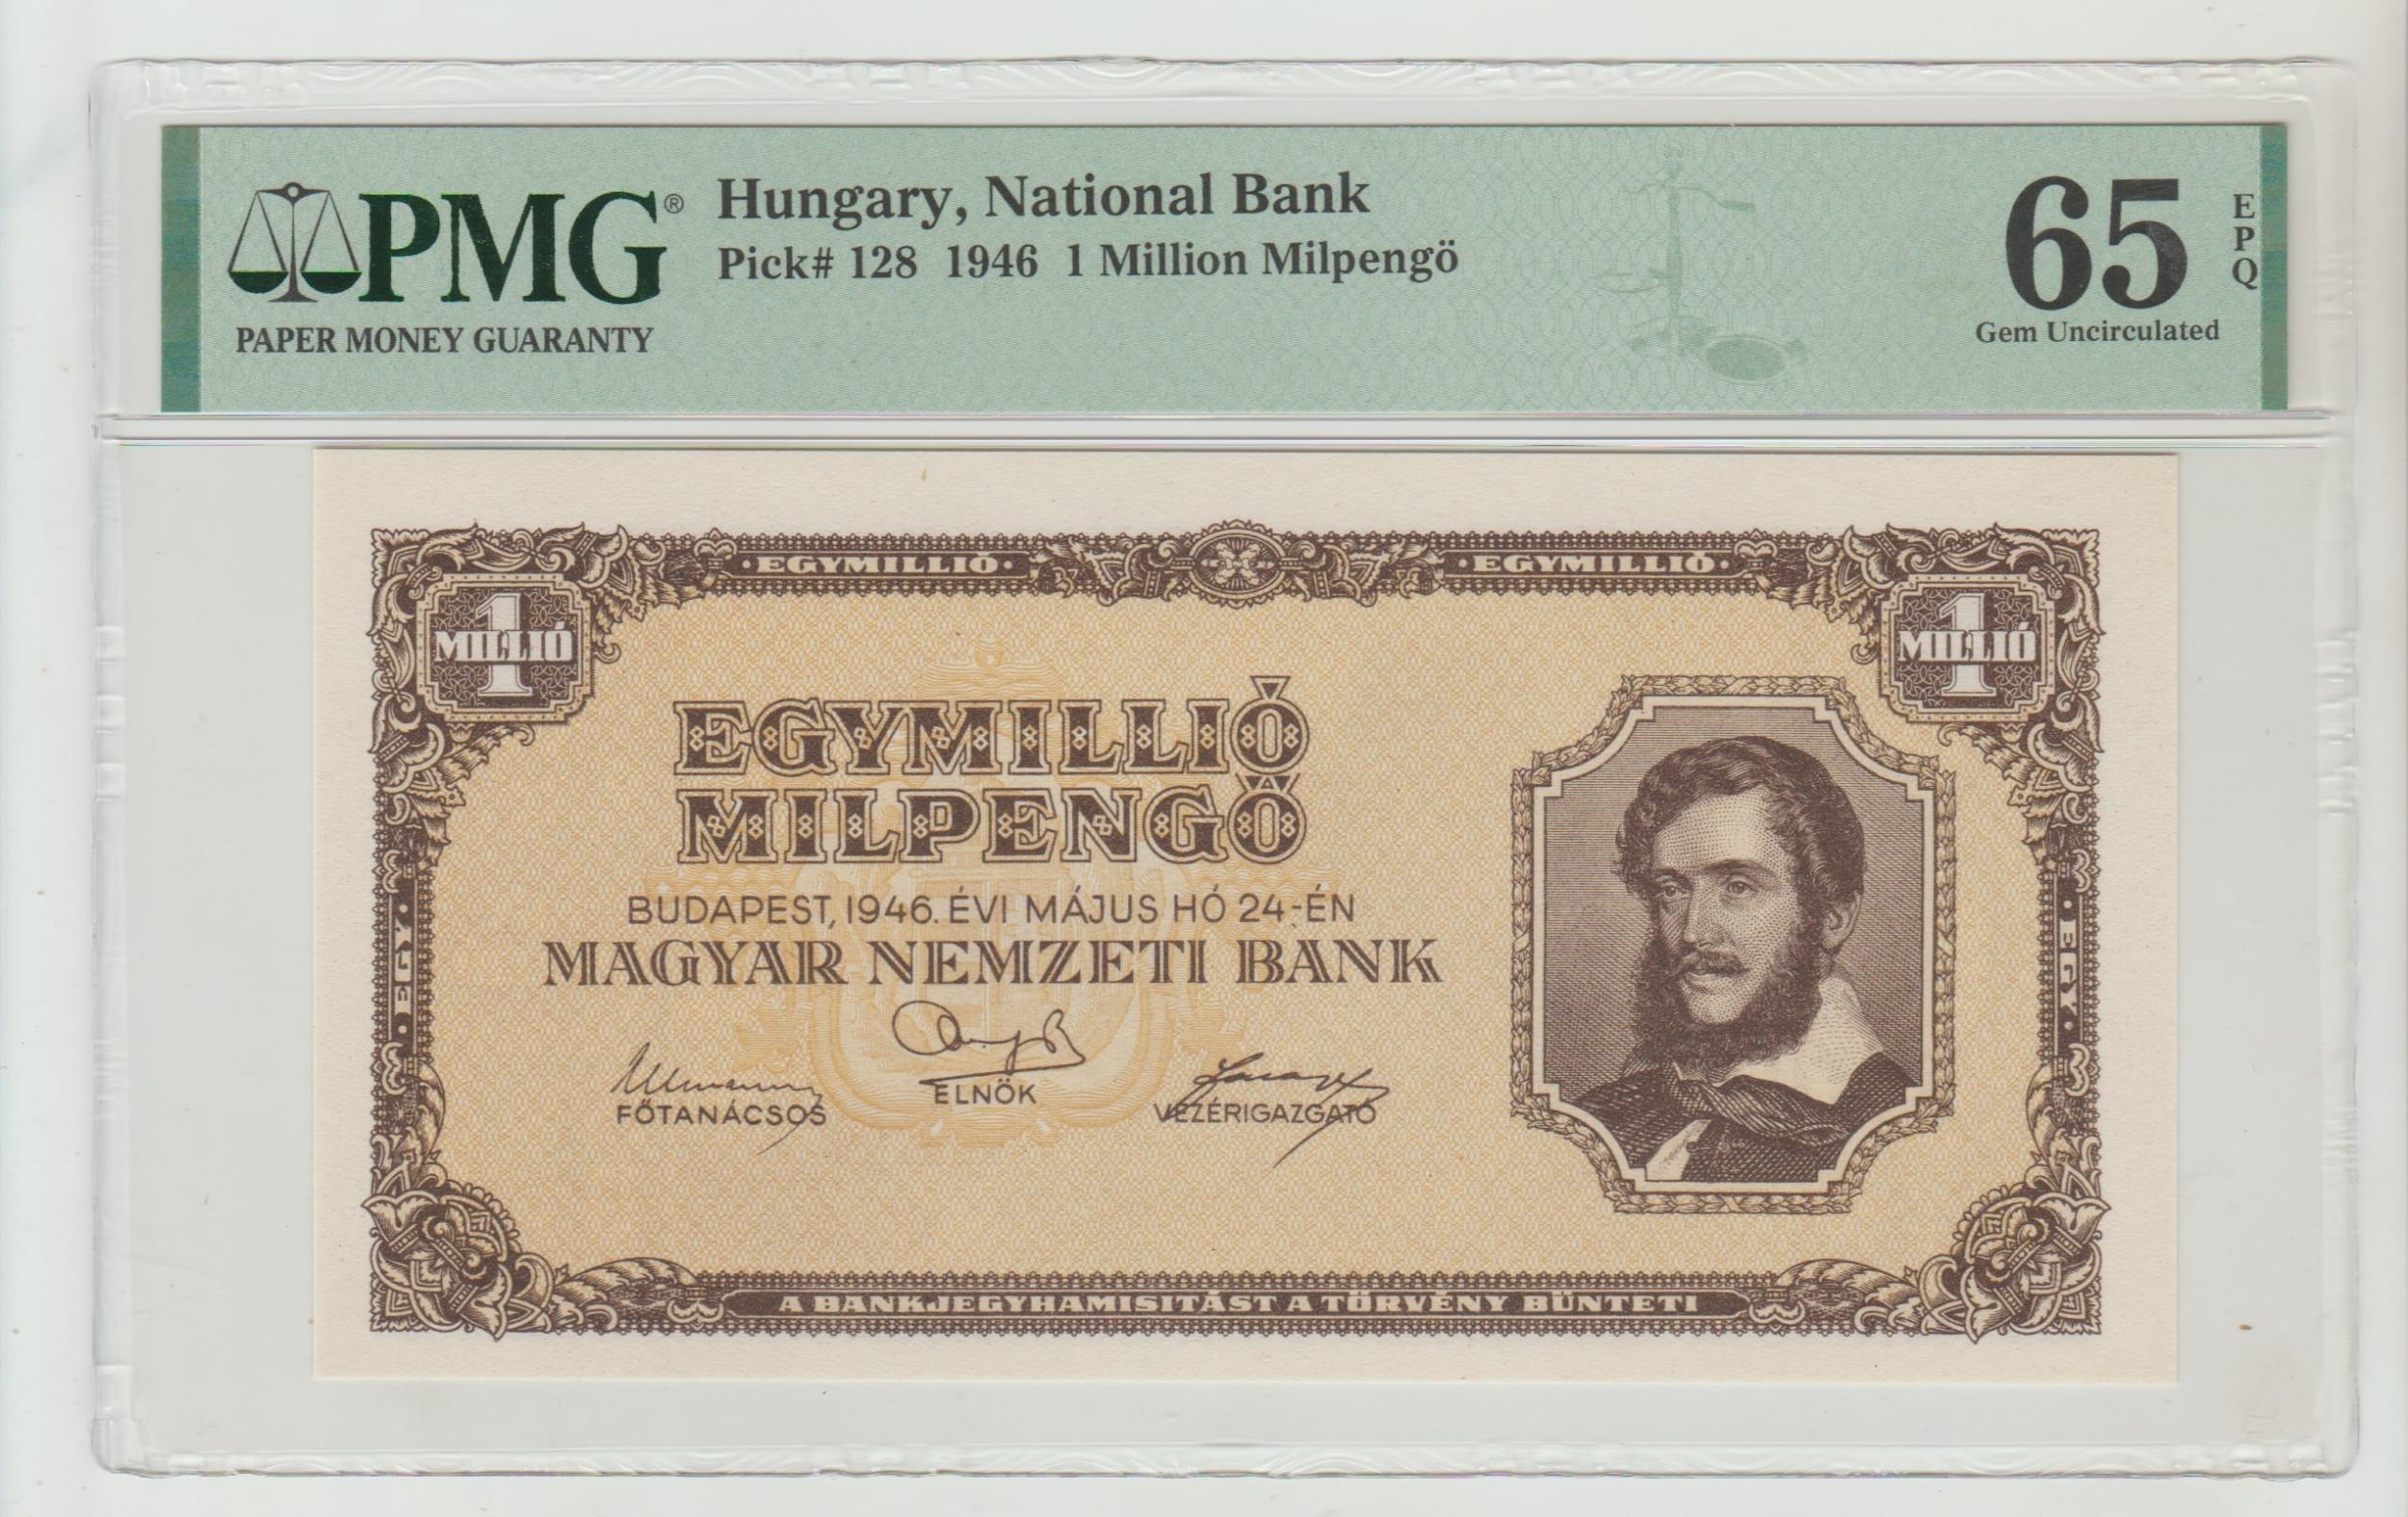 Hungary, 1 Million Milpengö, 1946 year